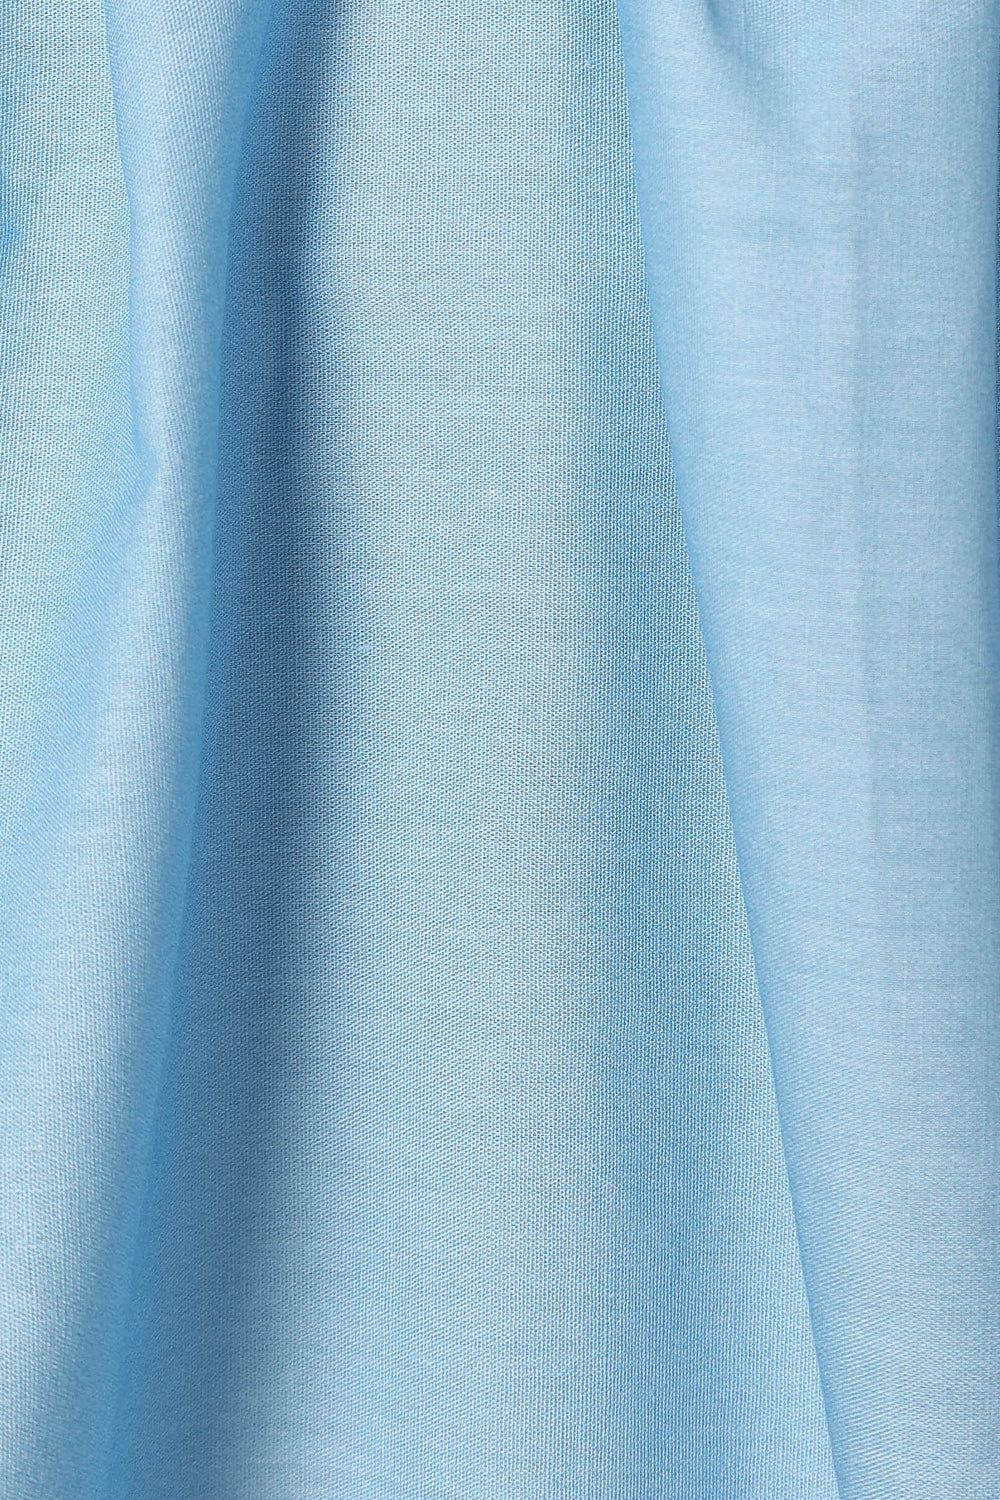 DRESSES Natalia Midi Dress - Blue Gradient